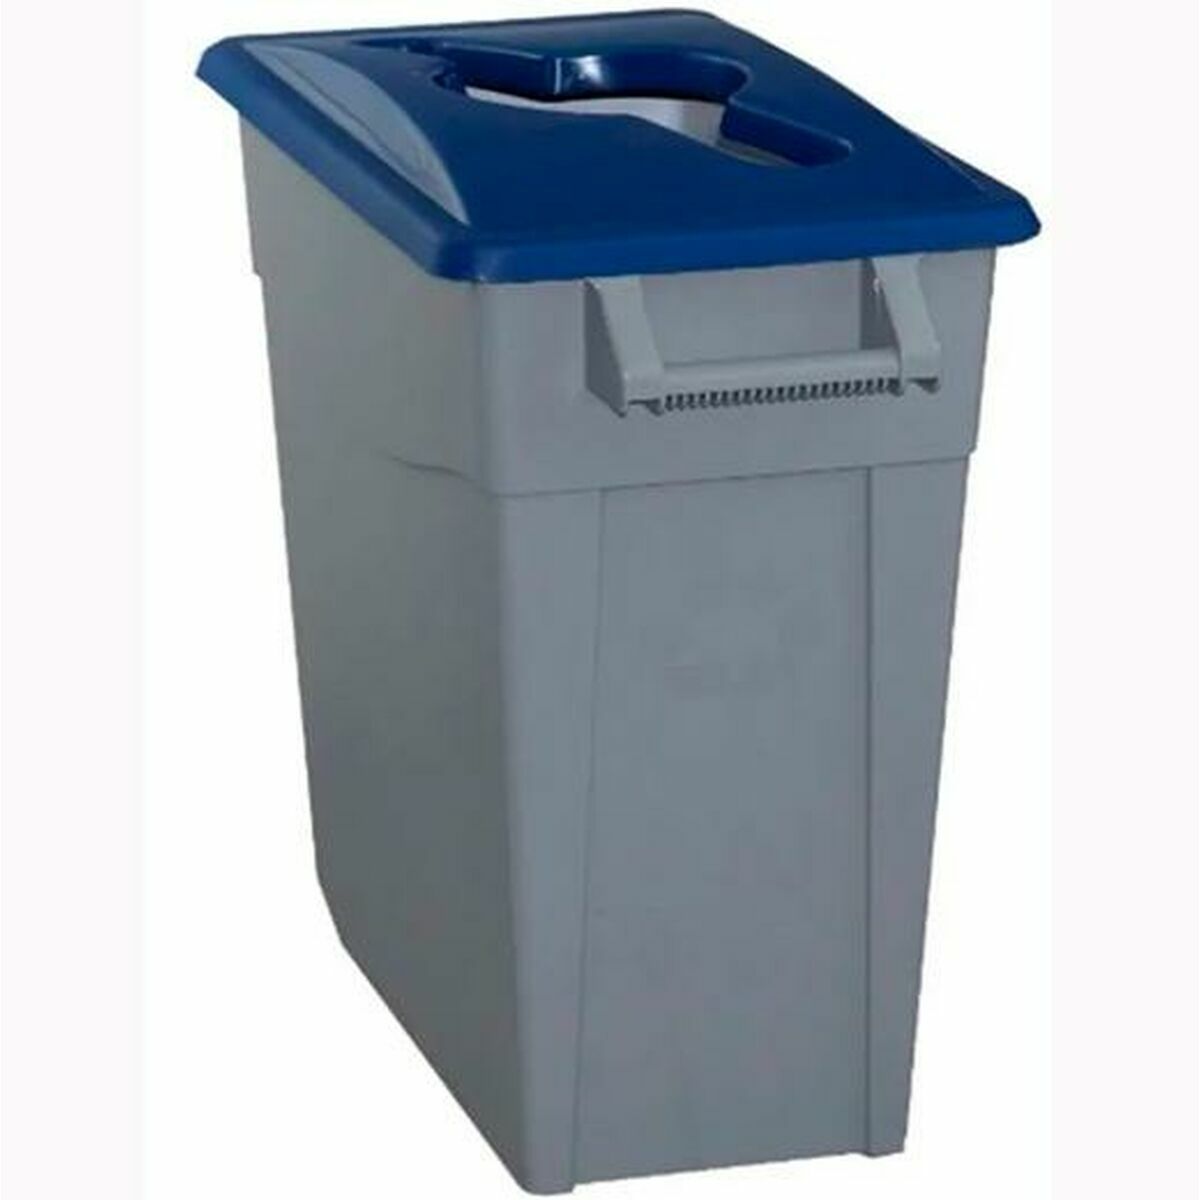 Recycling prullenbak Denox 65 L Blauw (2 Stuks)